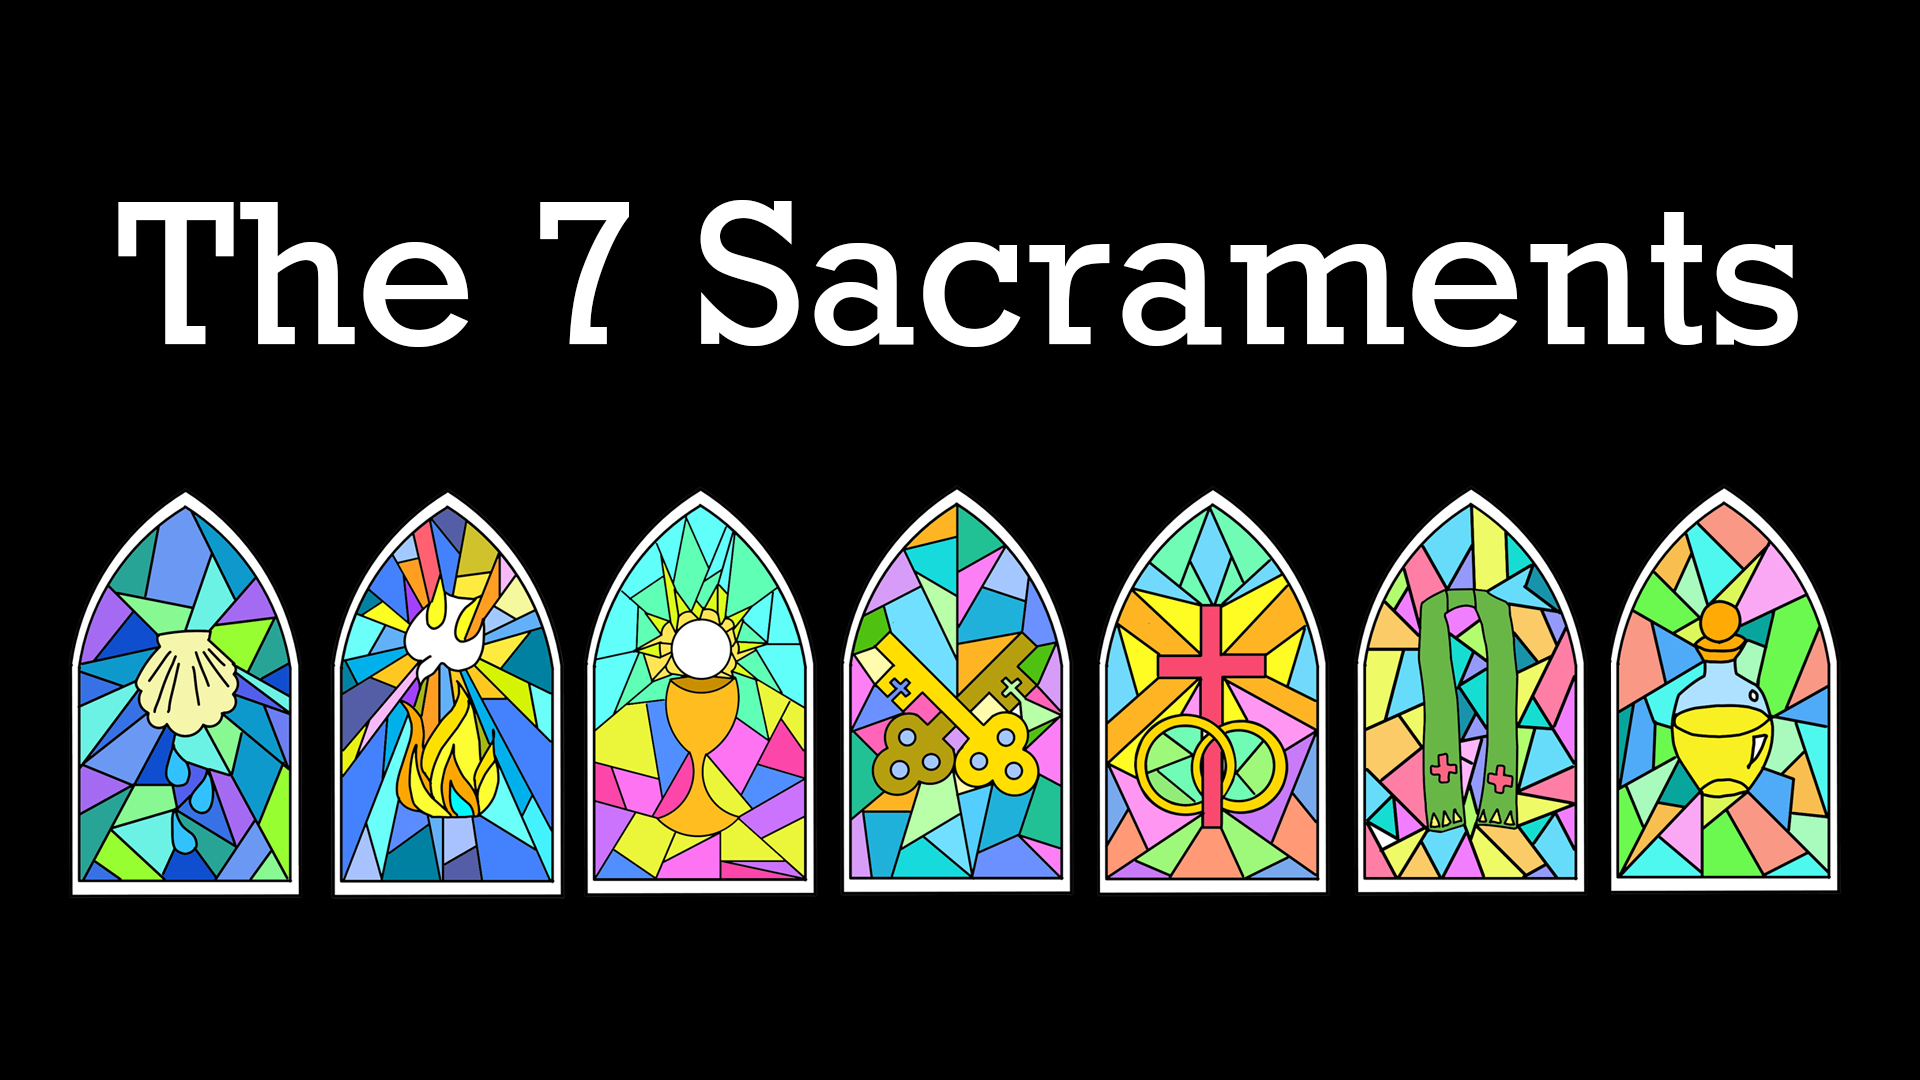 The Seven Sacrament of the Catholic Church